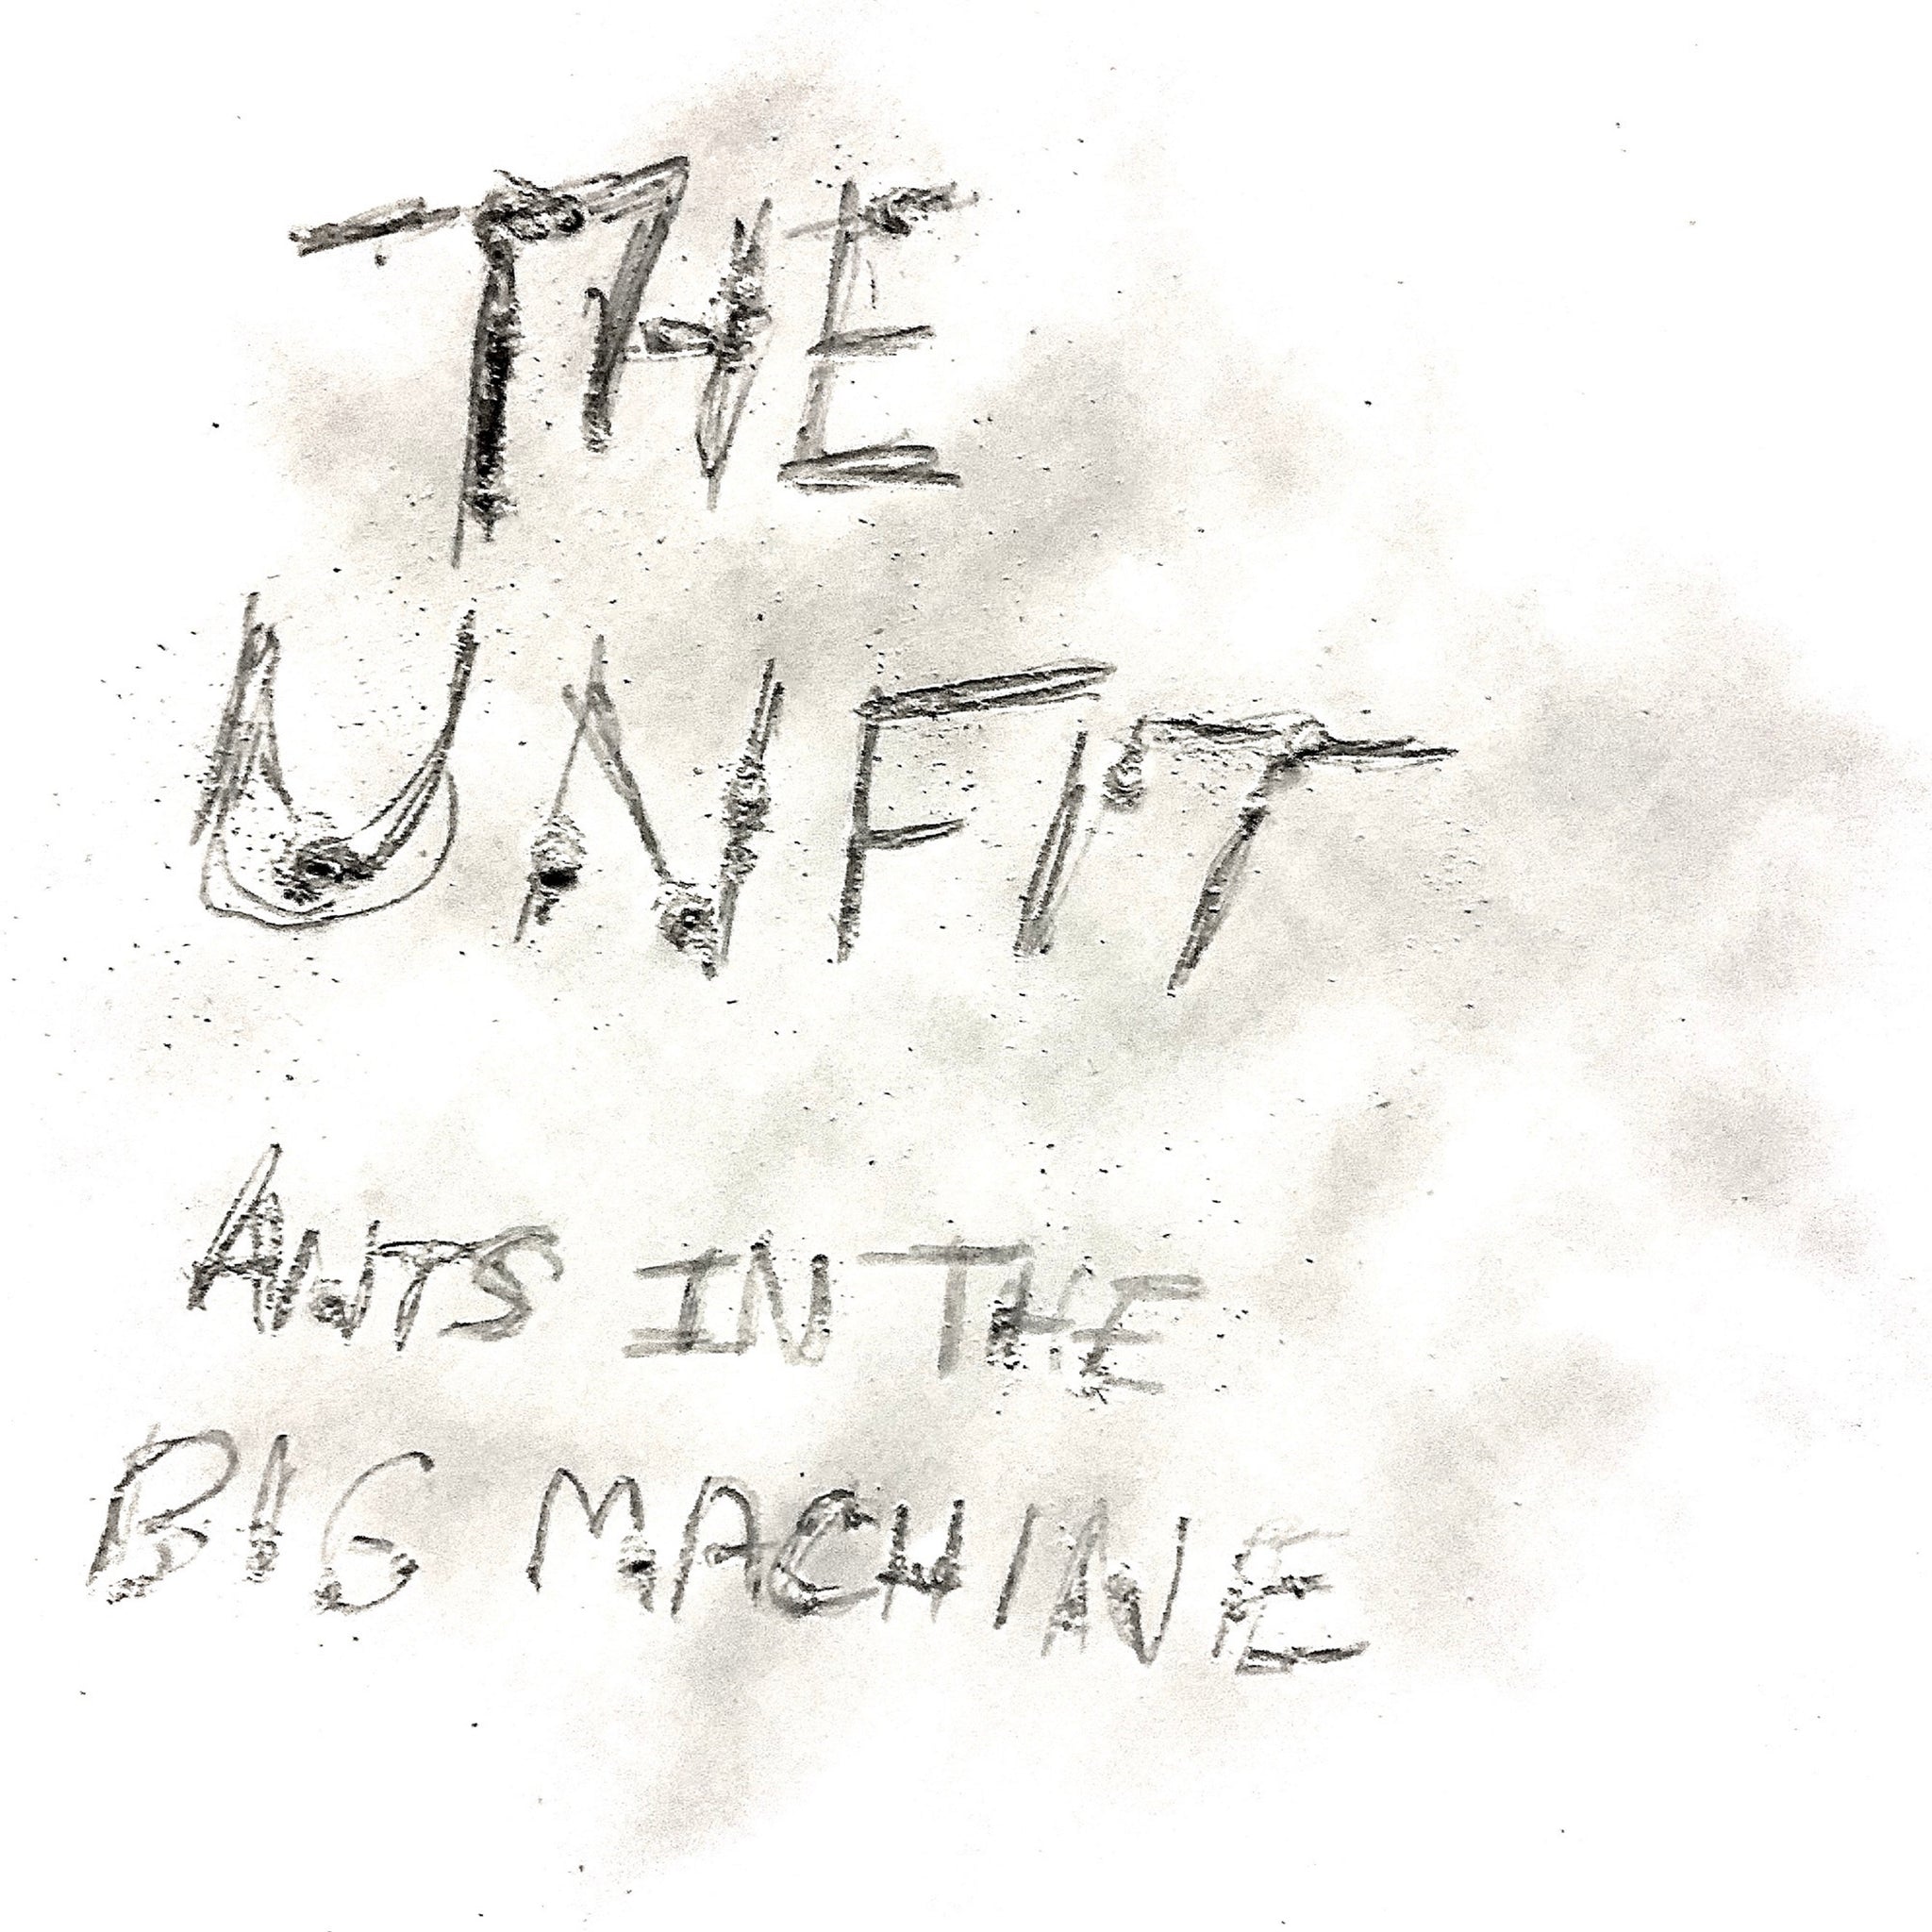 Ants in the Big Machine